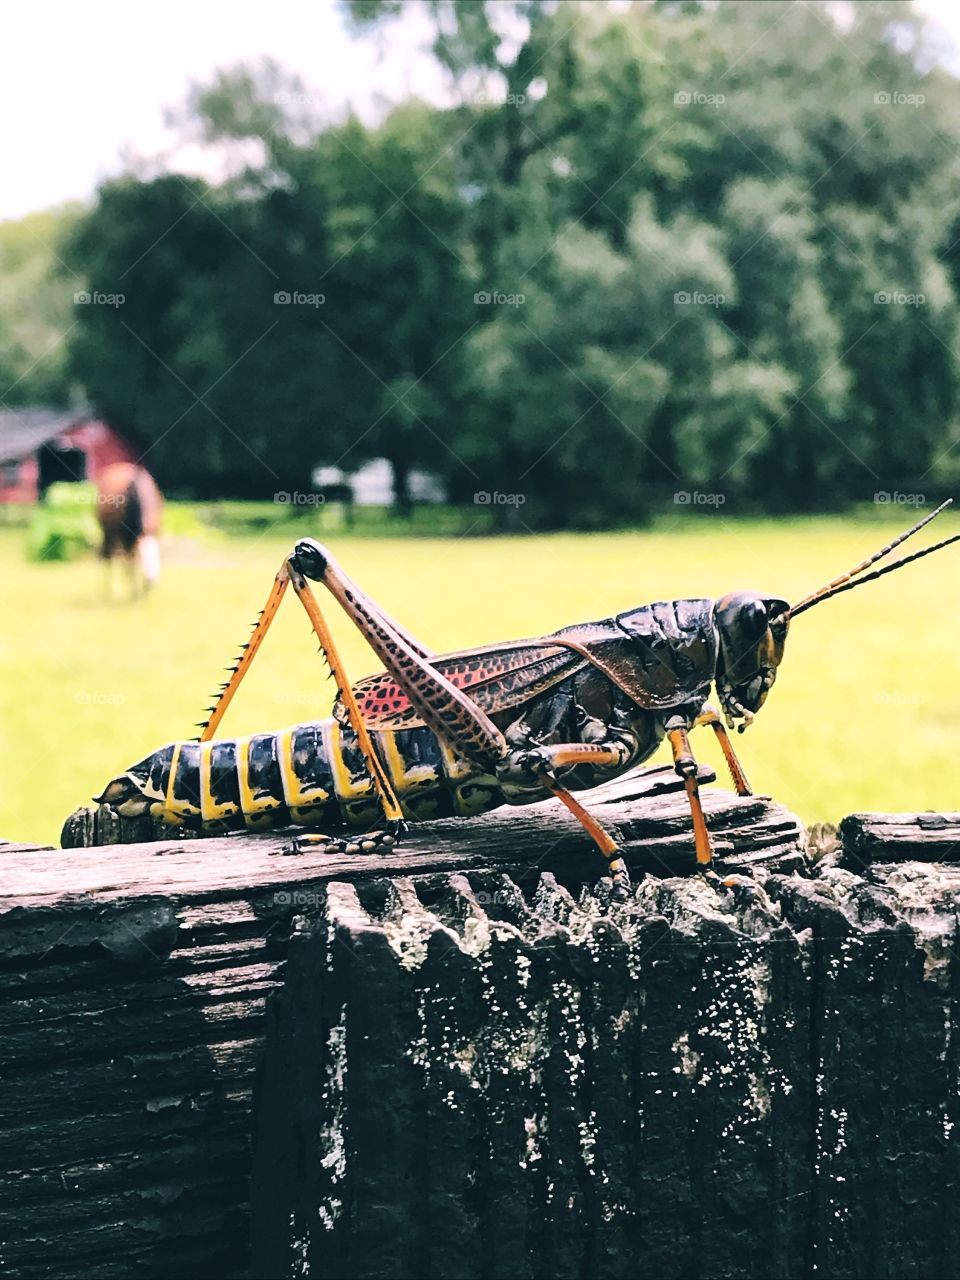 I’m on the fence ... grasshopper observation 